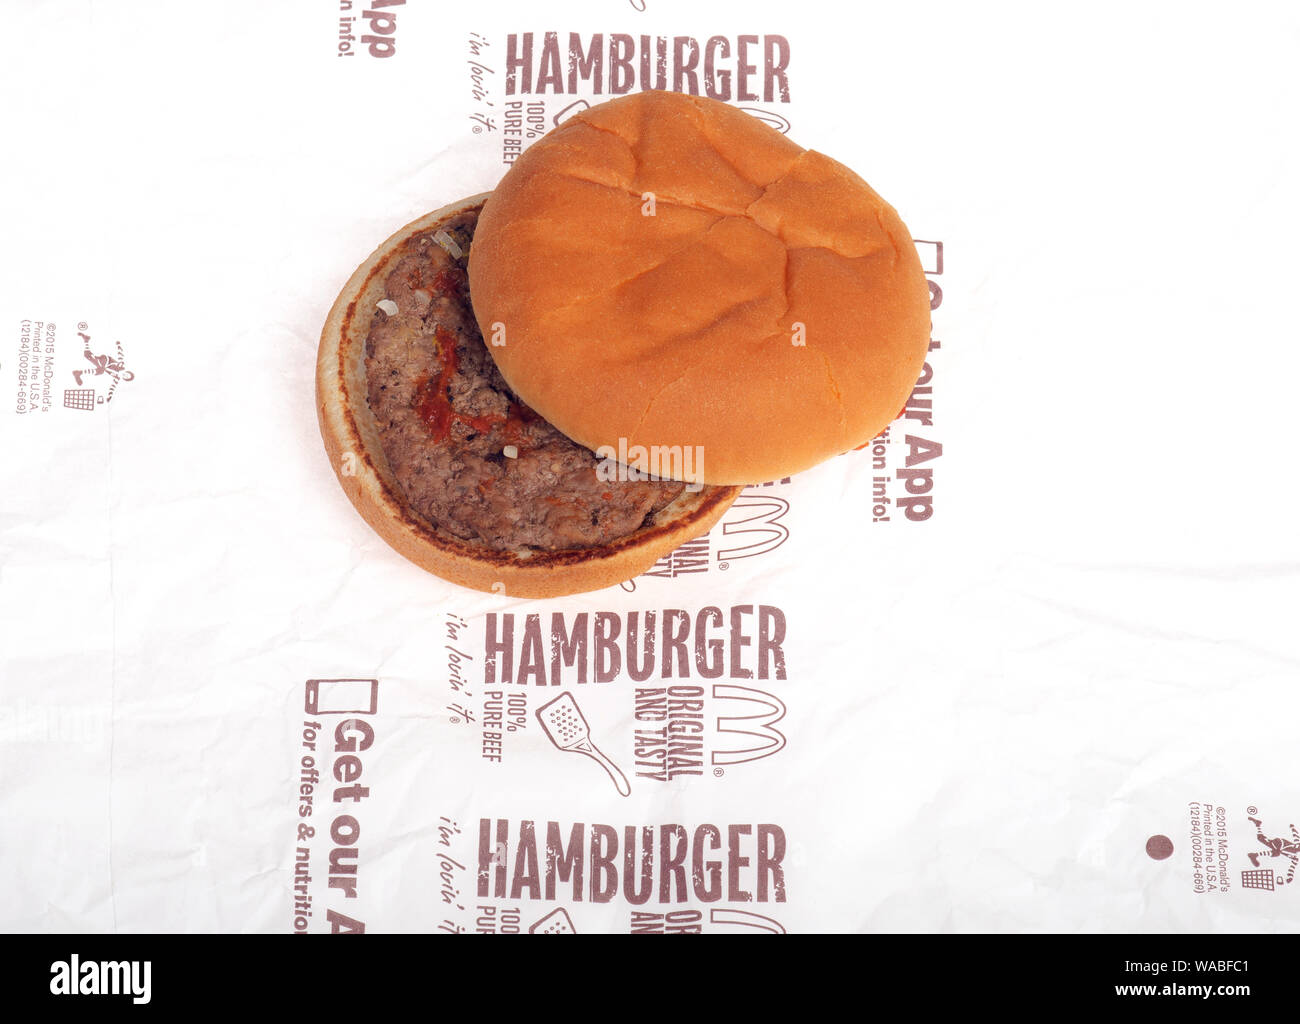 McDonald's fast food hamburger à emporter sur l'emballage Banque D'Images